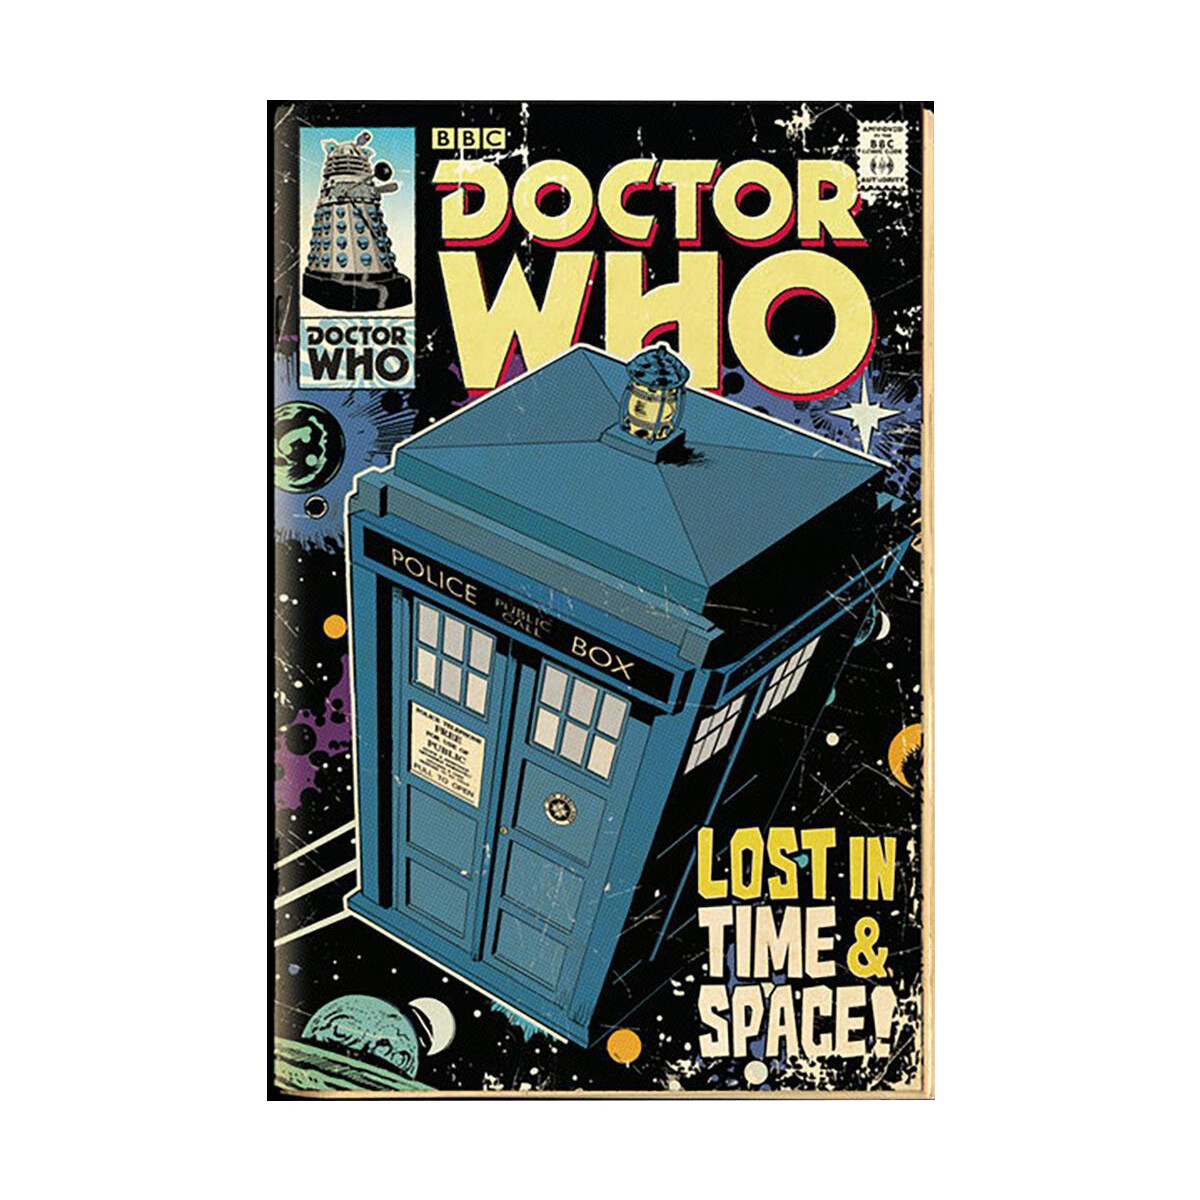 Casa Afiches / posters Doctor Who TA1904 Multicolor